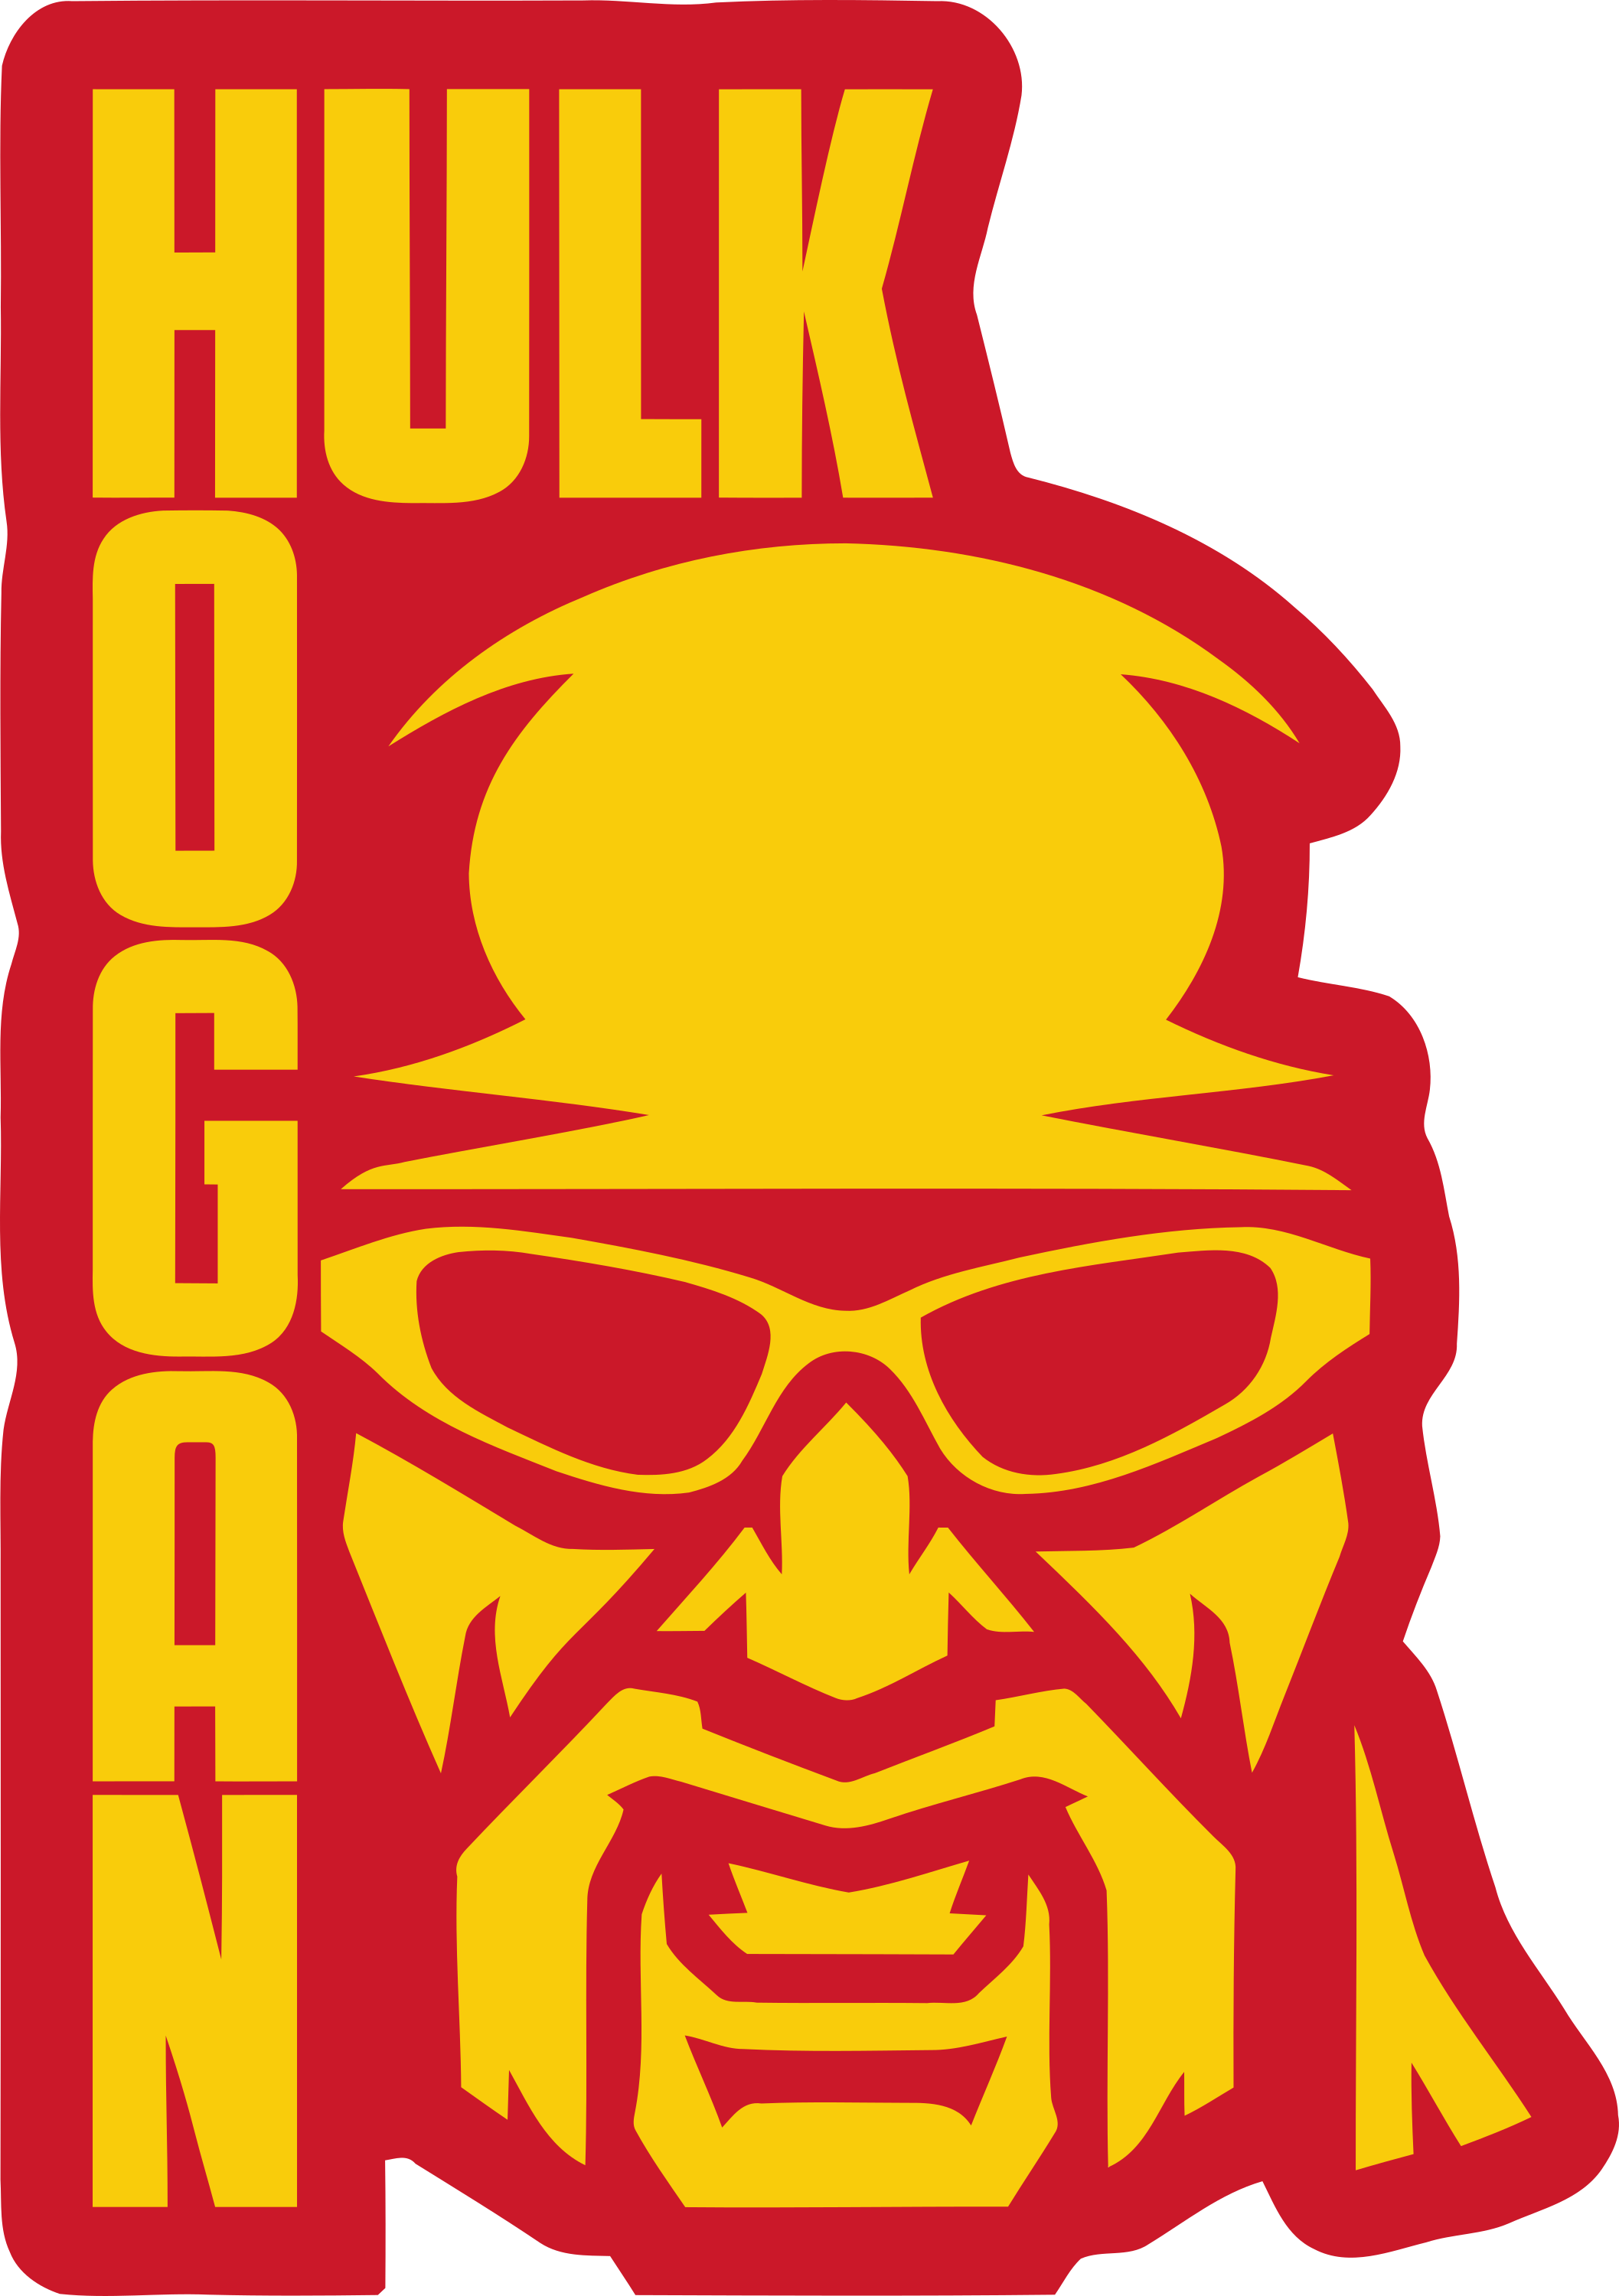 WWE Hulk Hogan Logo by EdgeRulz17 on DeviantArt